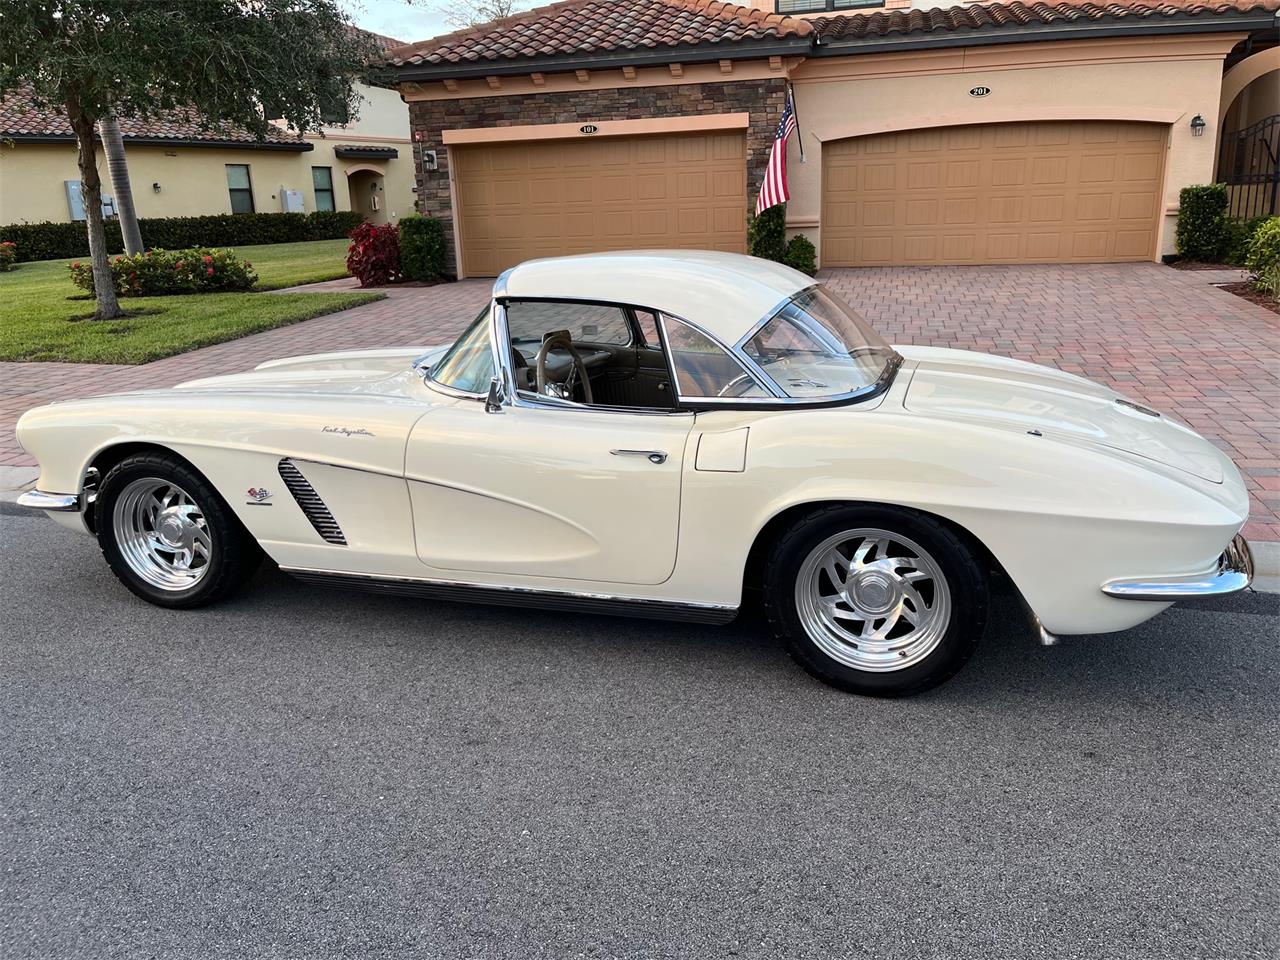 For Sale: 1962 Chevrolet Corvette in Naples, Florida for sale in Naples, FL